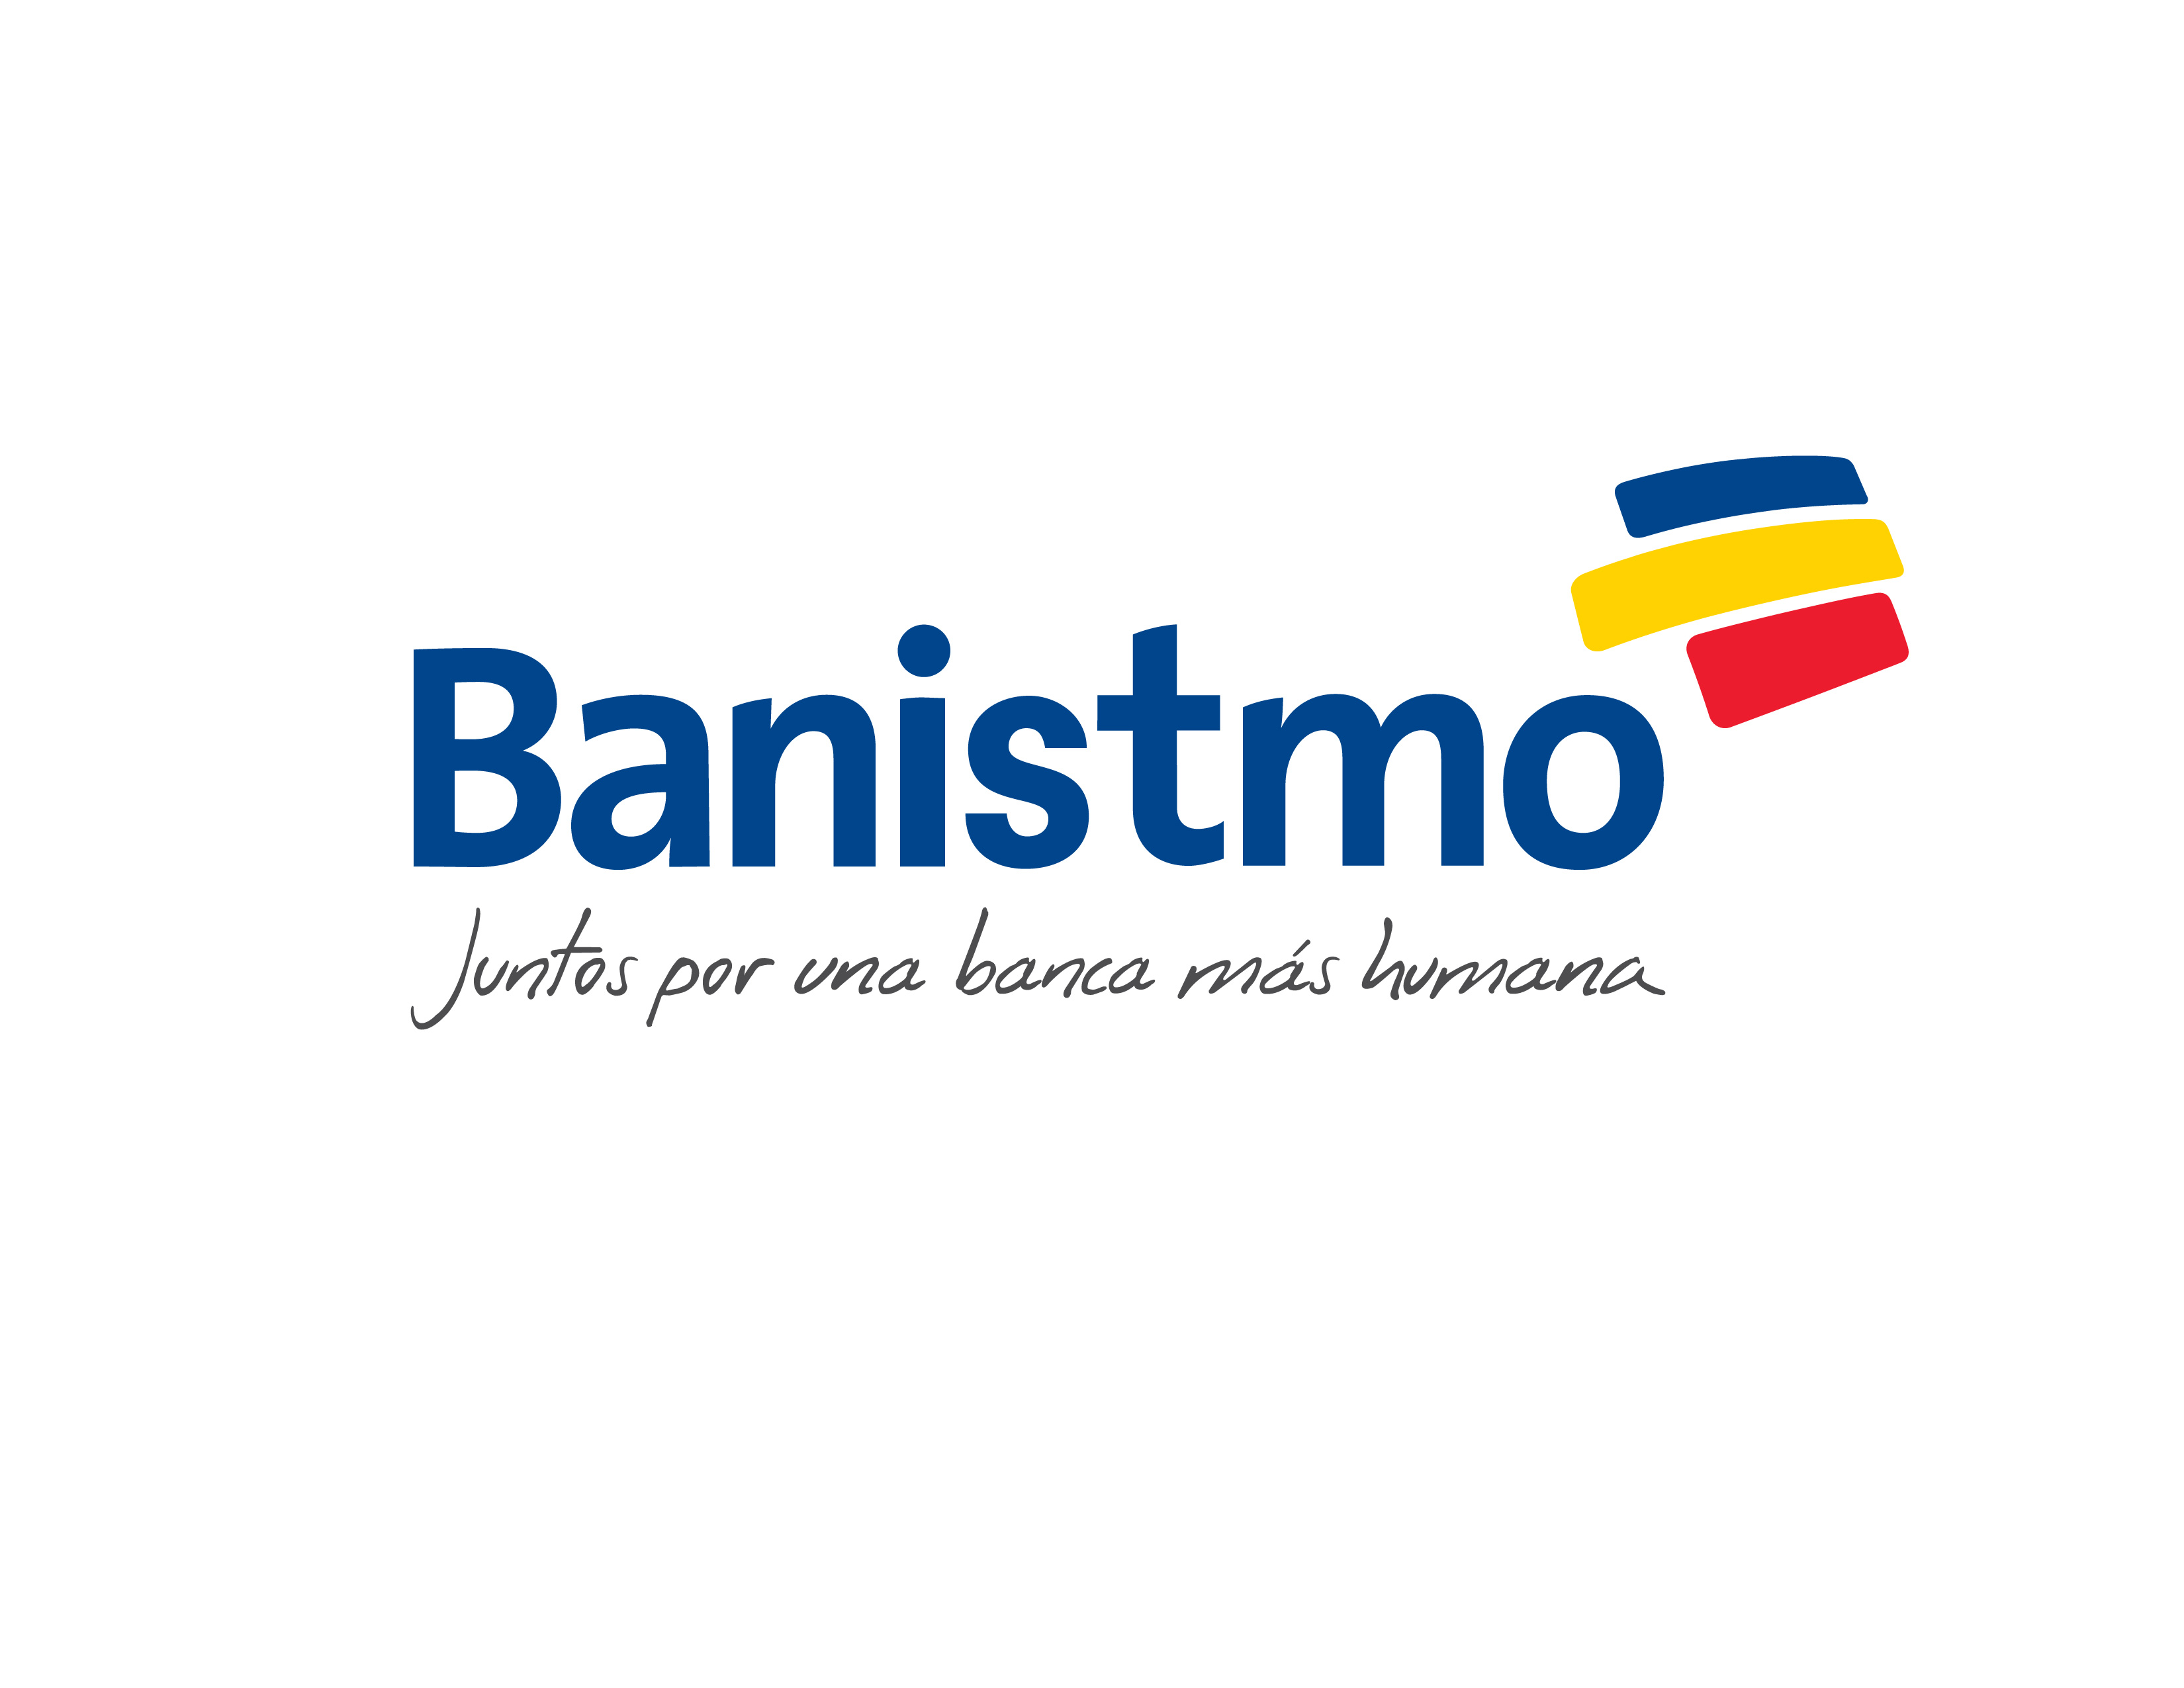 Banistmo Logo photo - 1